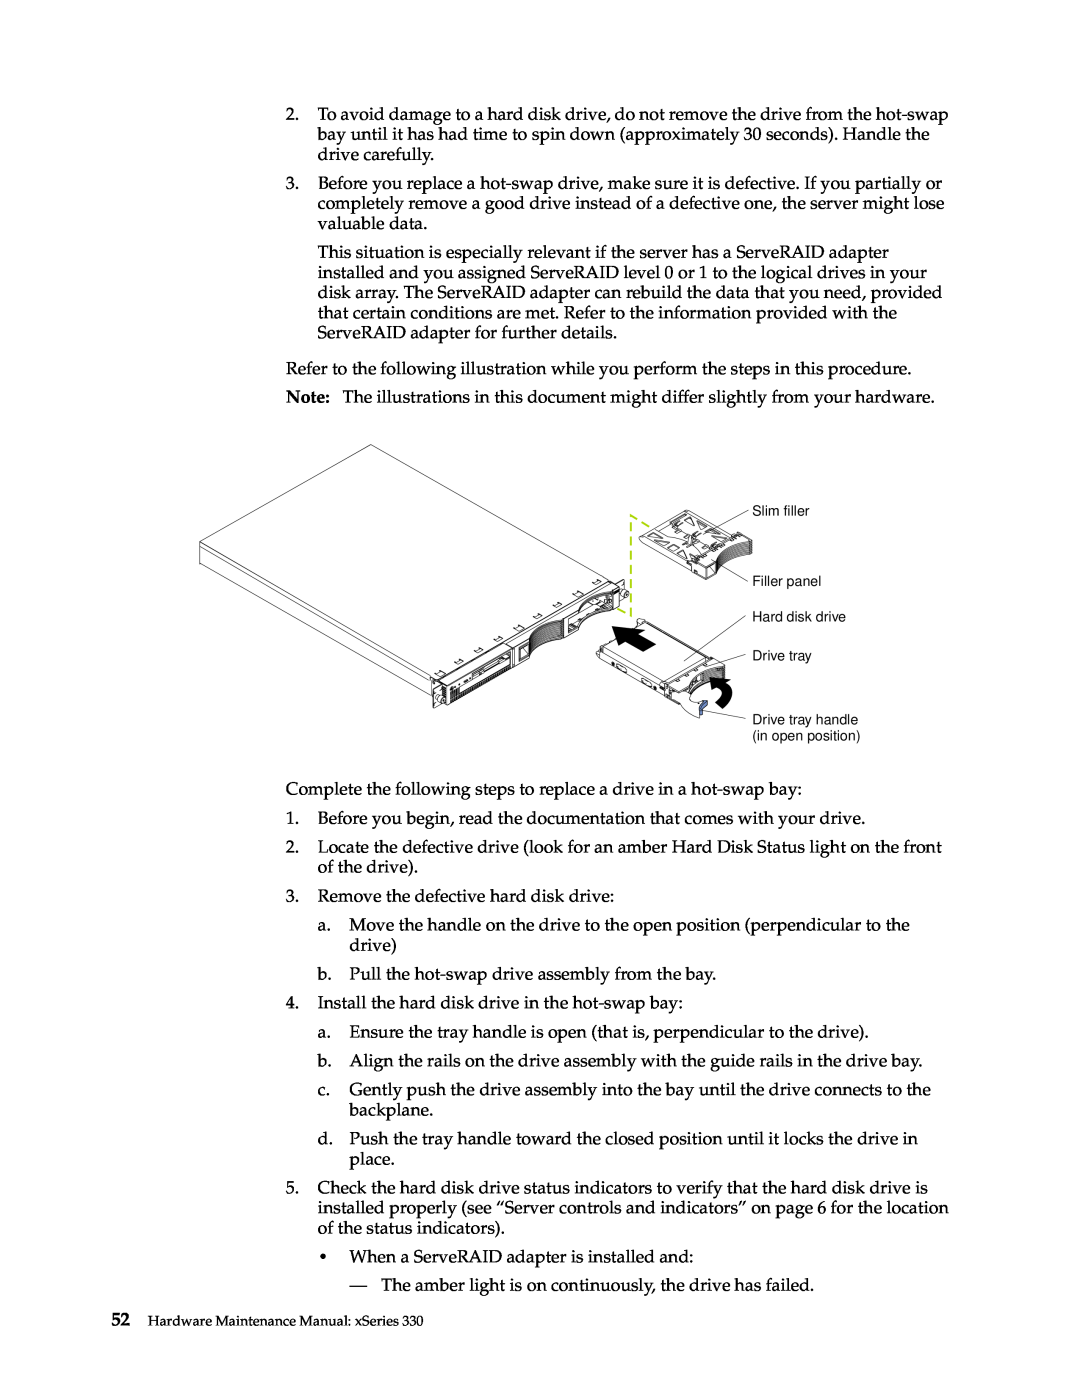 IBM xSeries 330 manual Remove the defective hard disk drive 